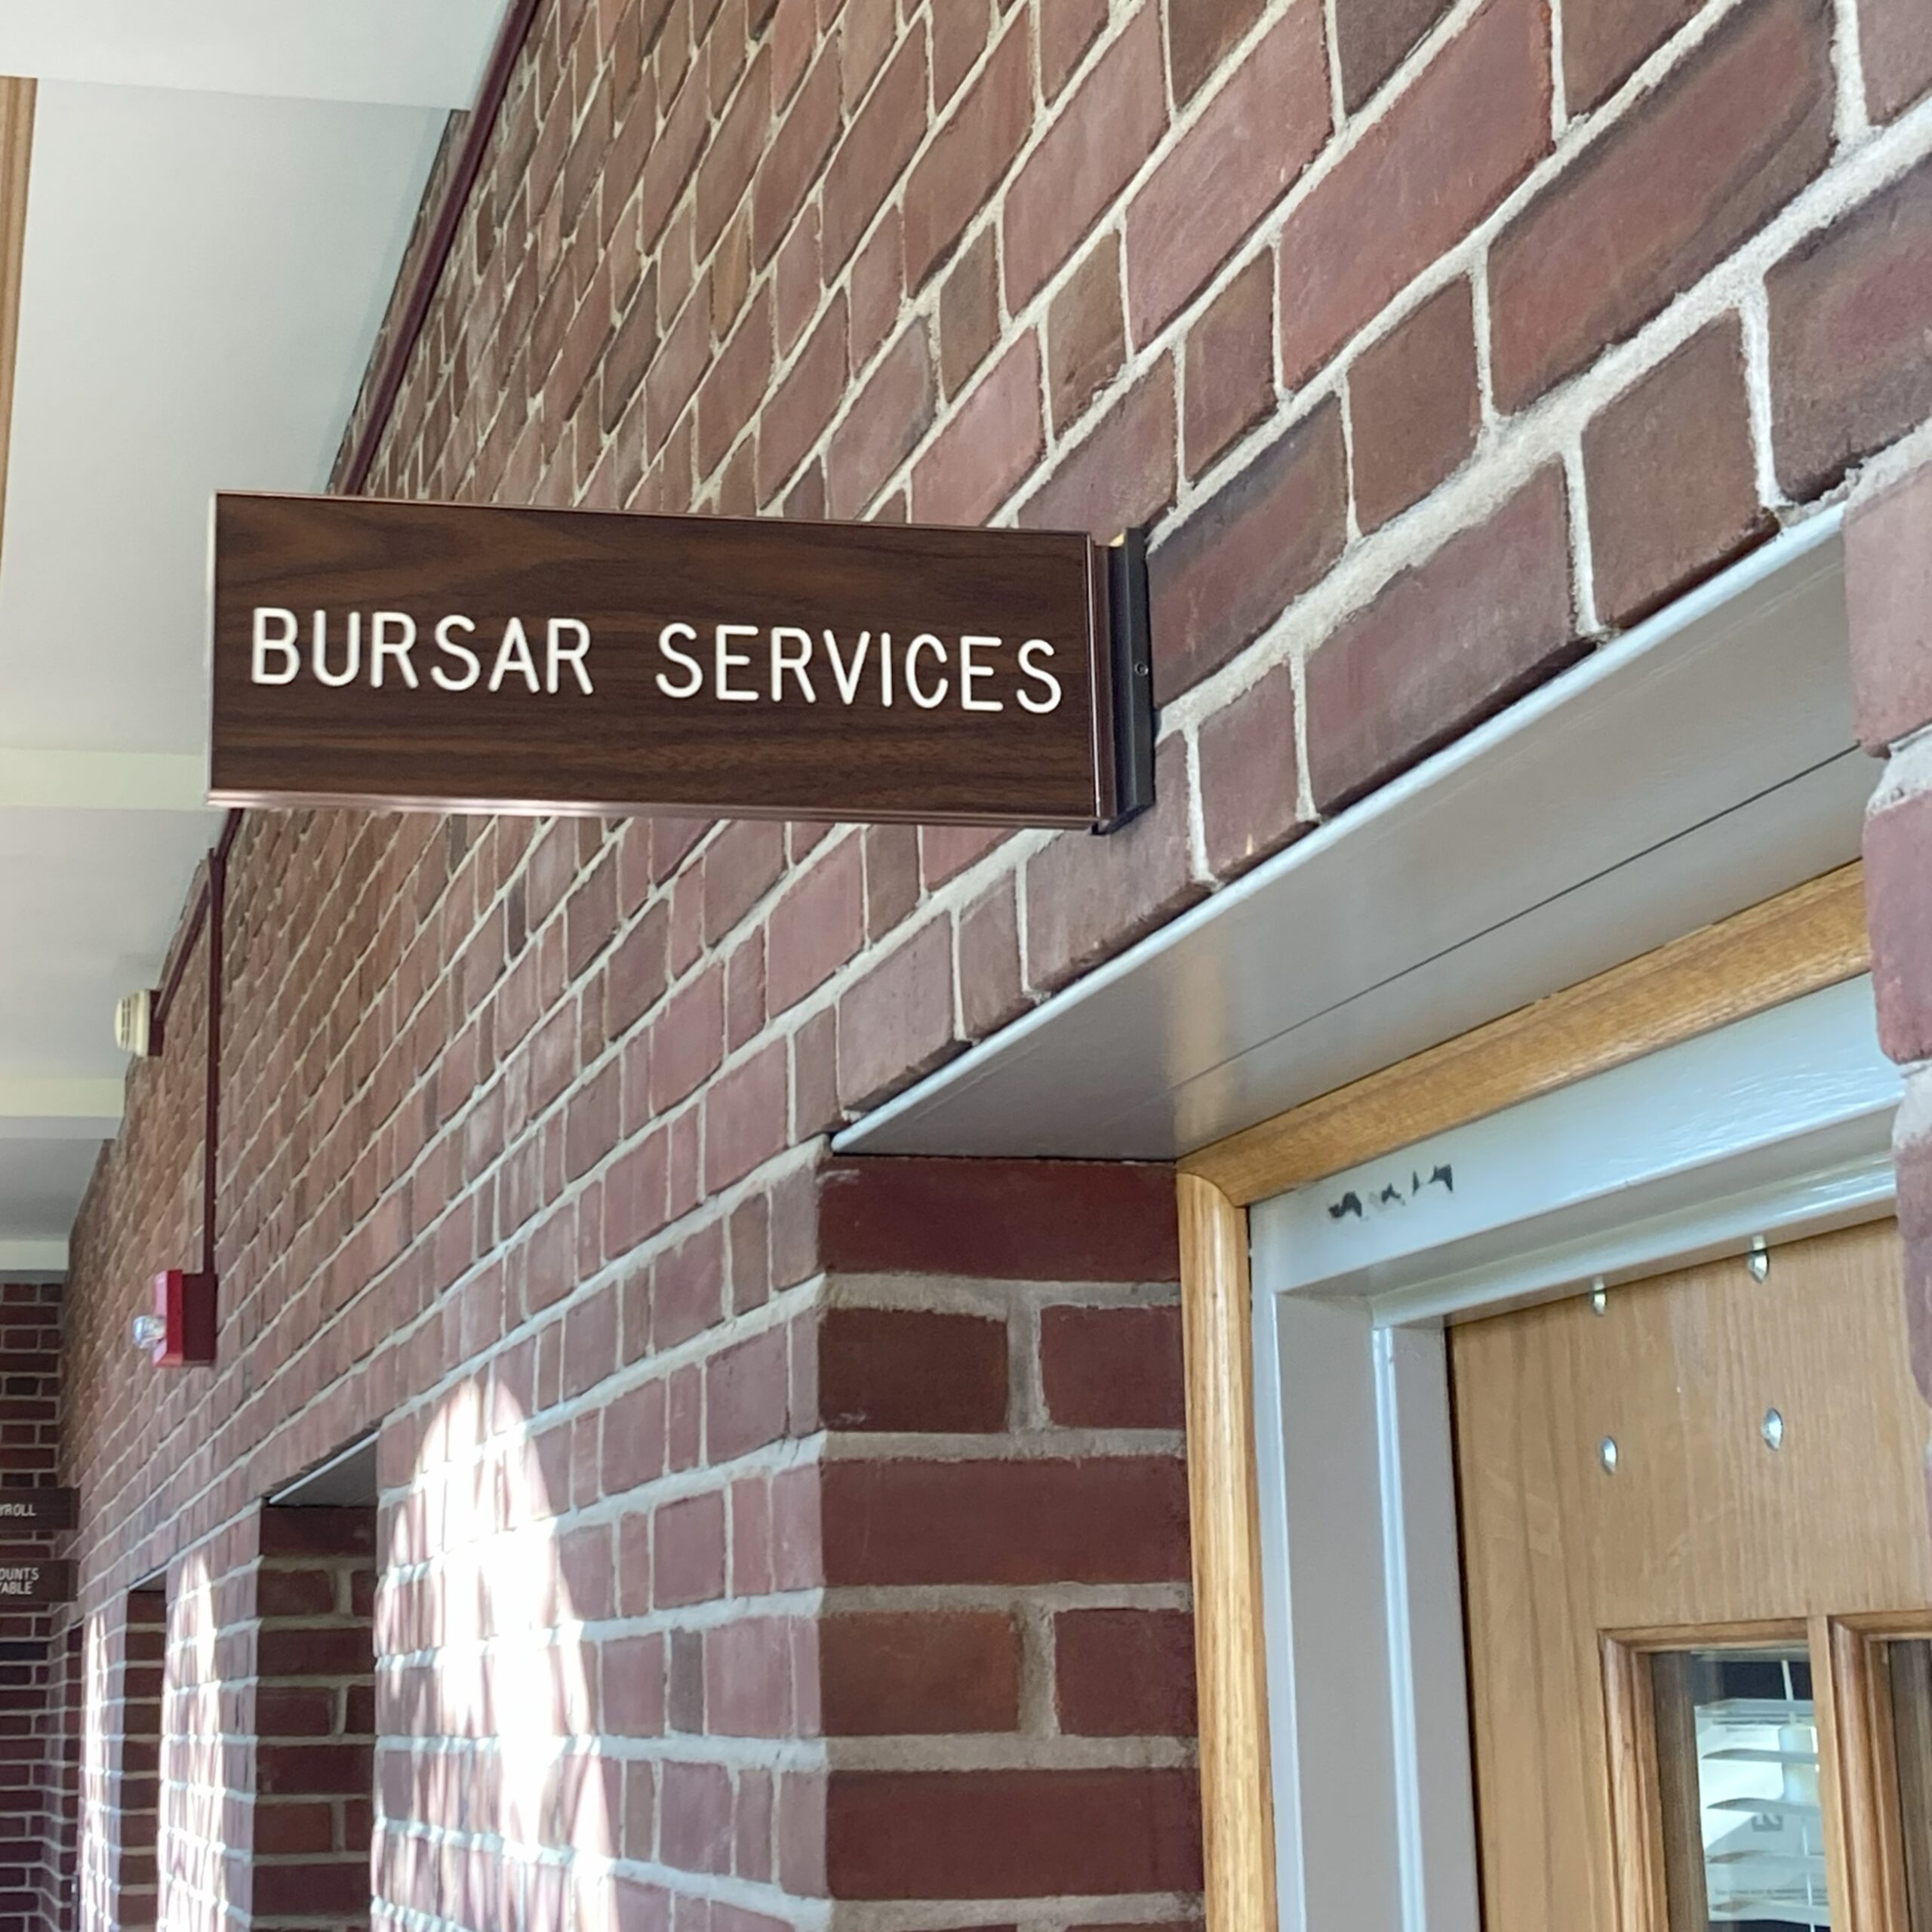 Bursar Services sign in college admin building.